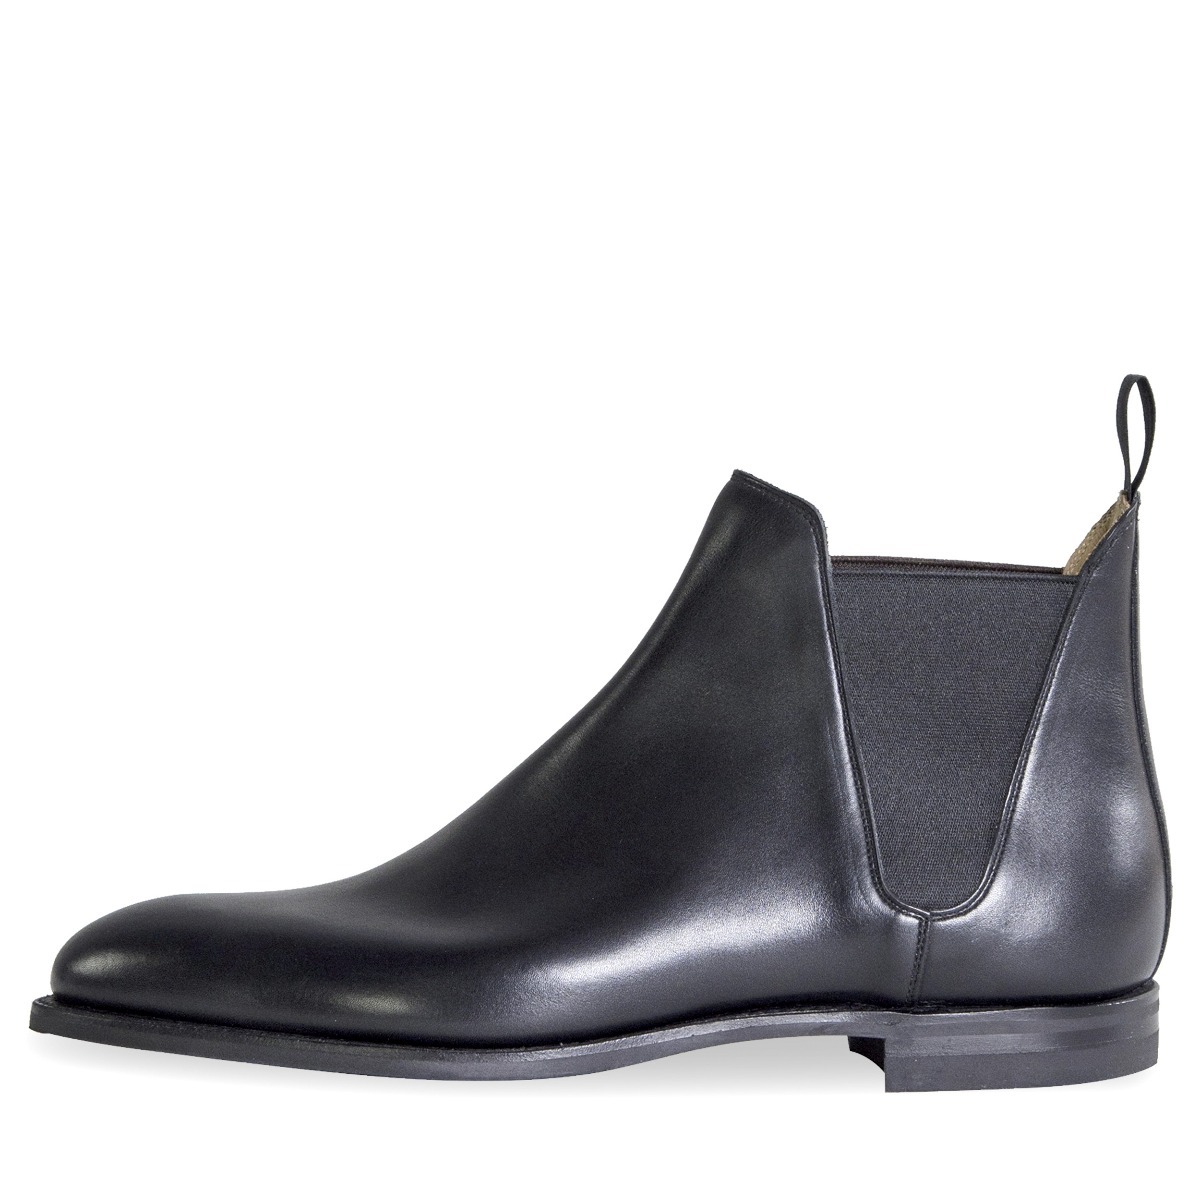 Crockett & Jones ’Chelsea VIII’ Calf Leather Boots Black